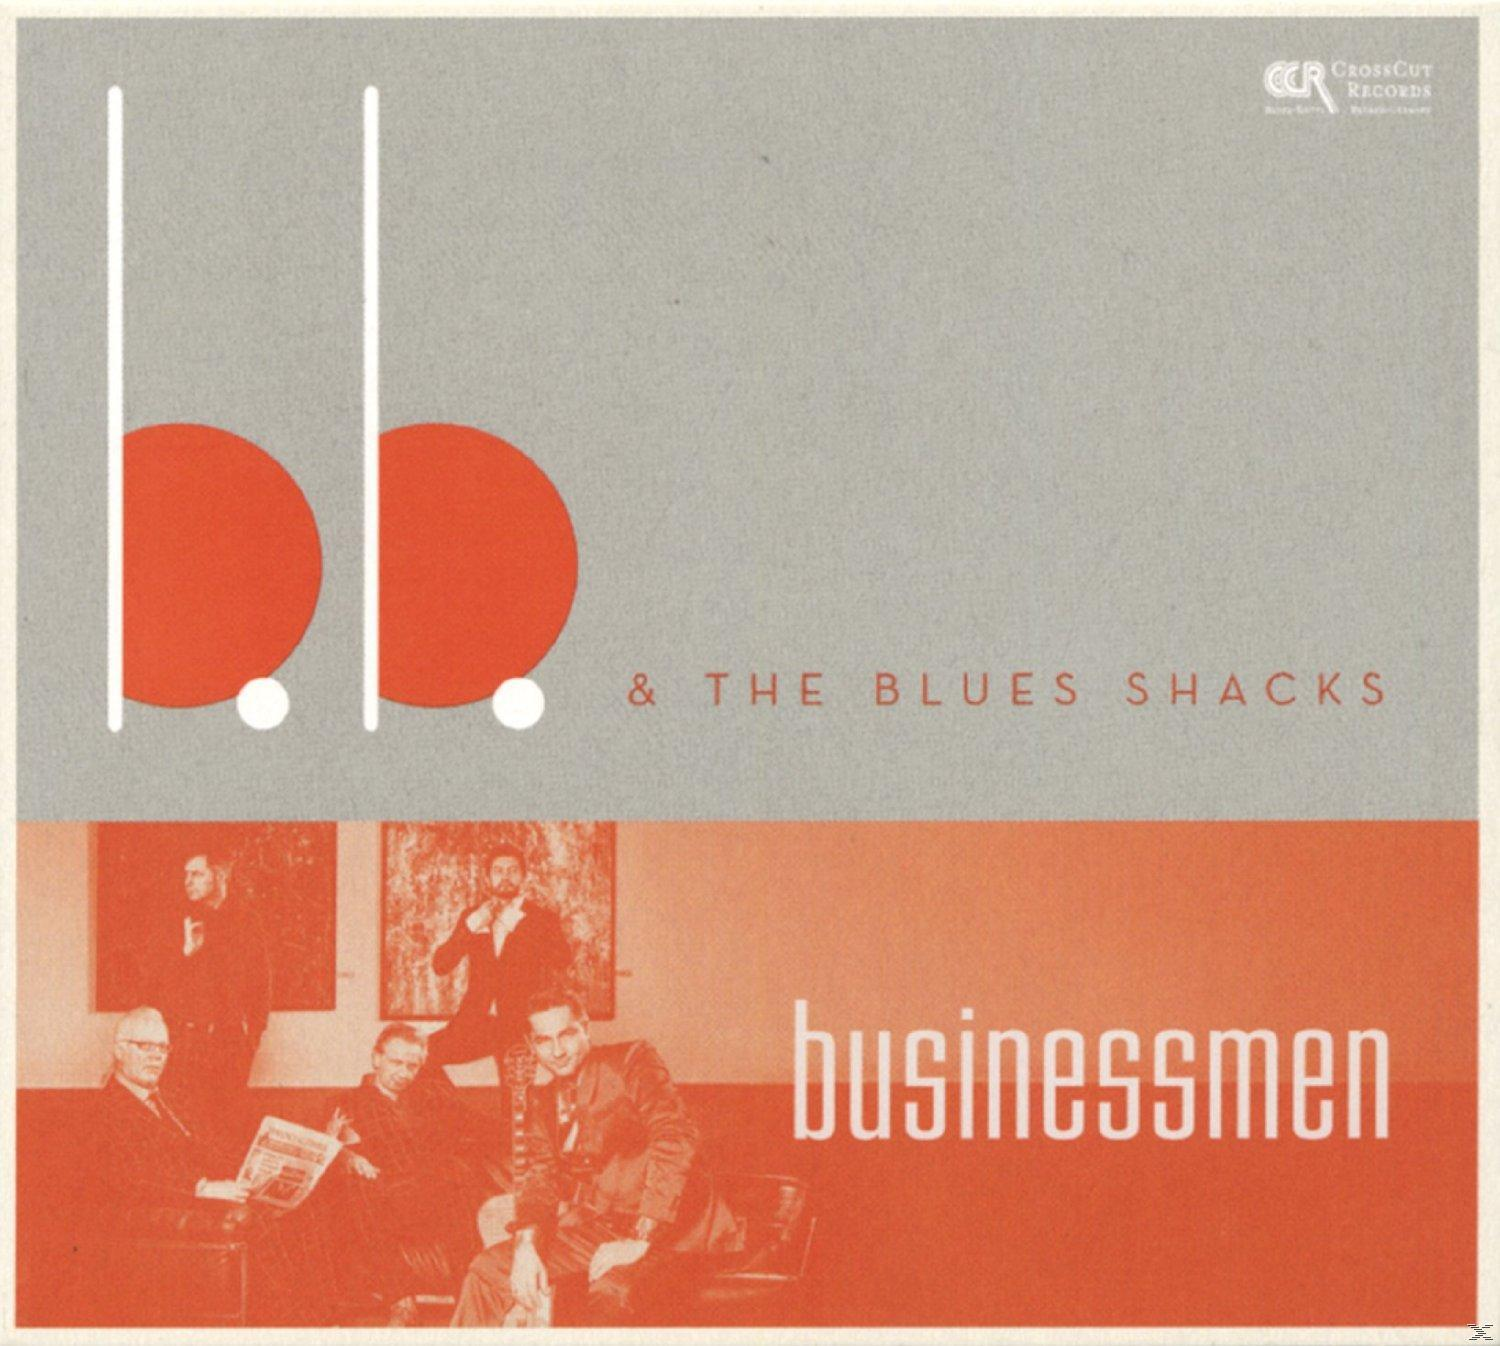 B.B.+BLUES (CD) - Businessmen - SHACKS